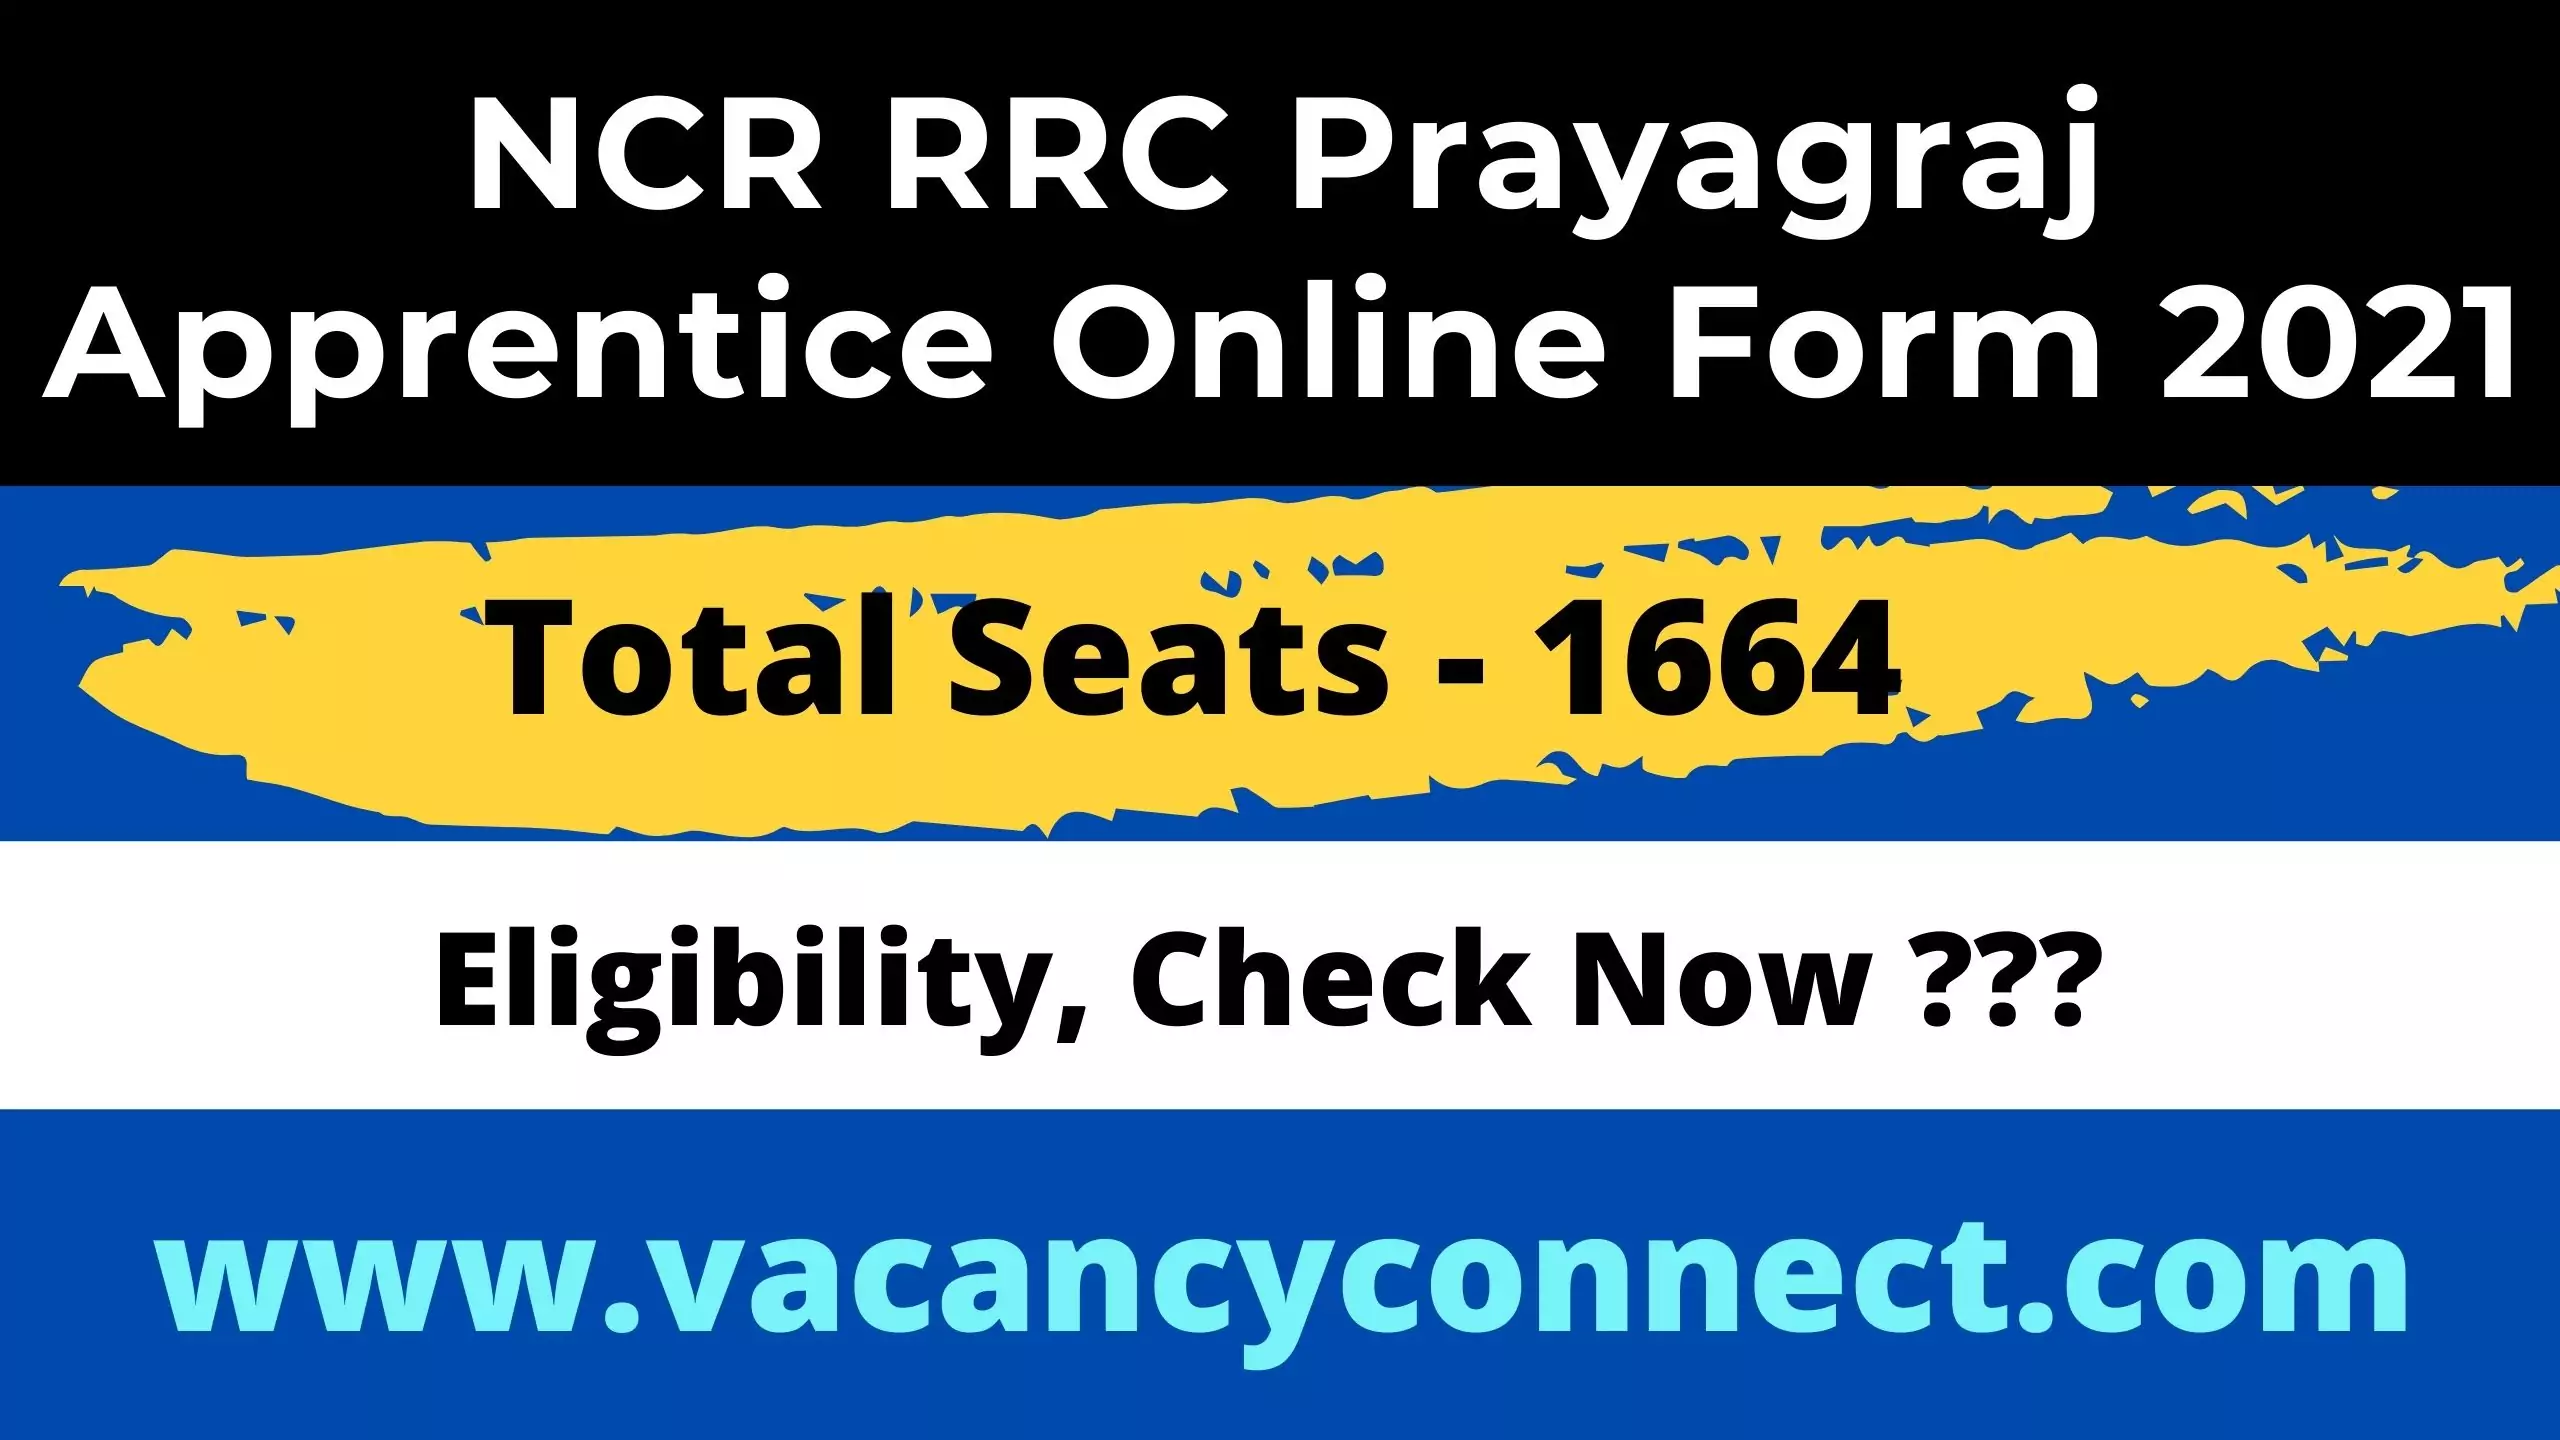 NCR RRC Prayagraj Apprentice Online Form 2021